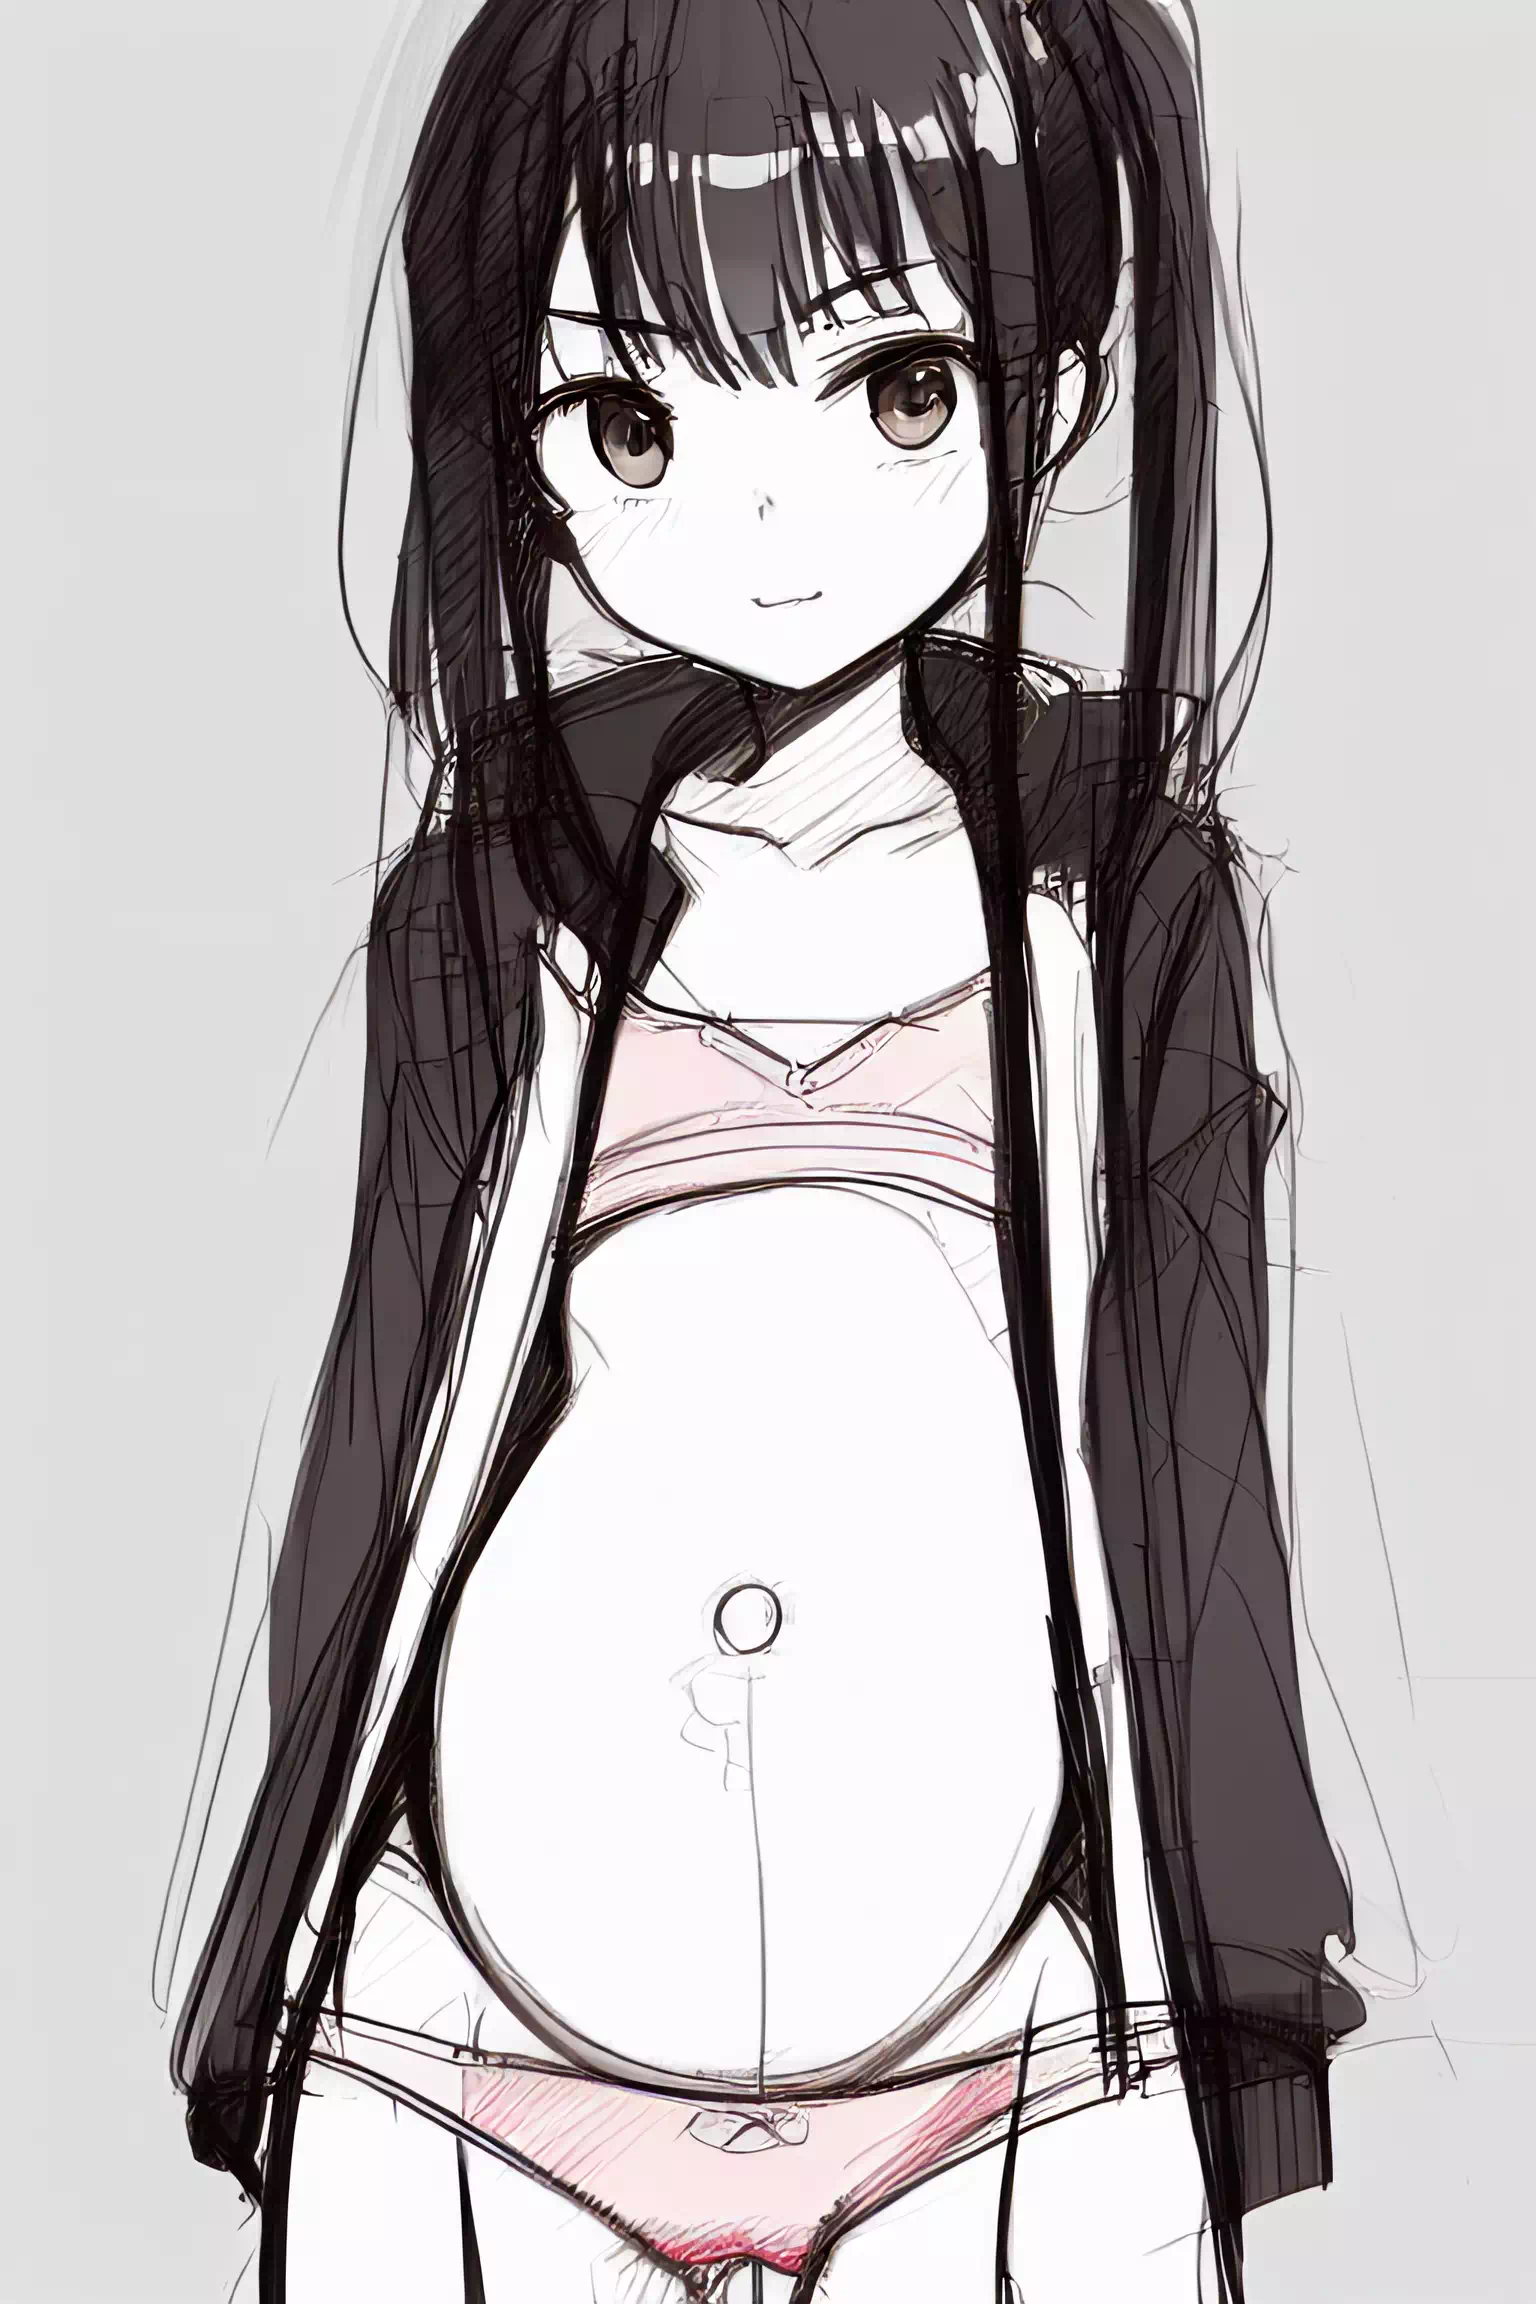 sketch of a pregnant loli girl